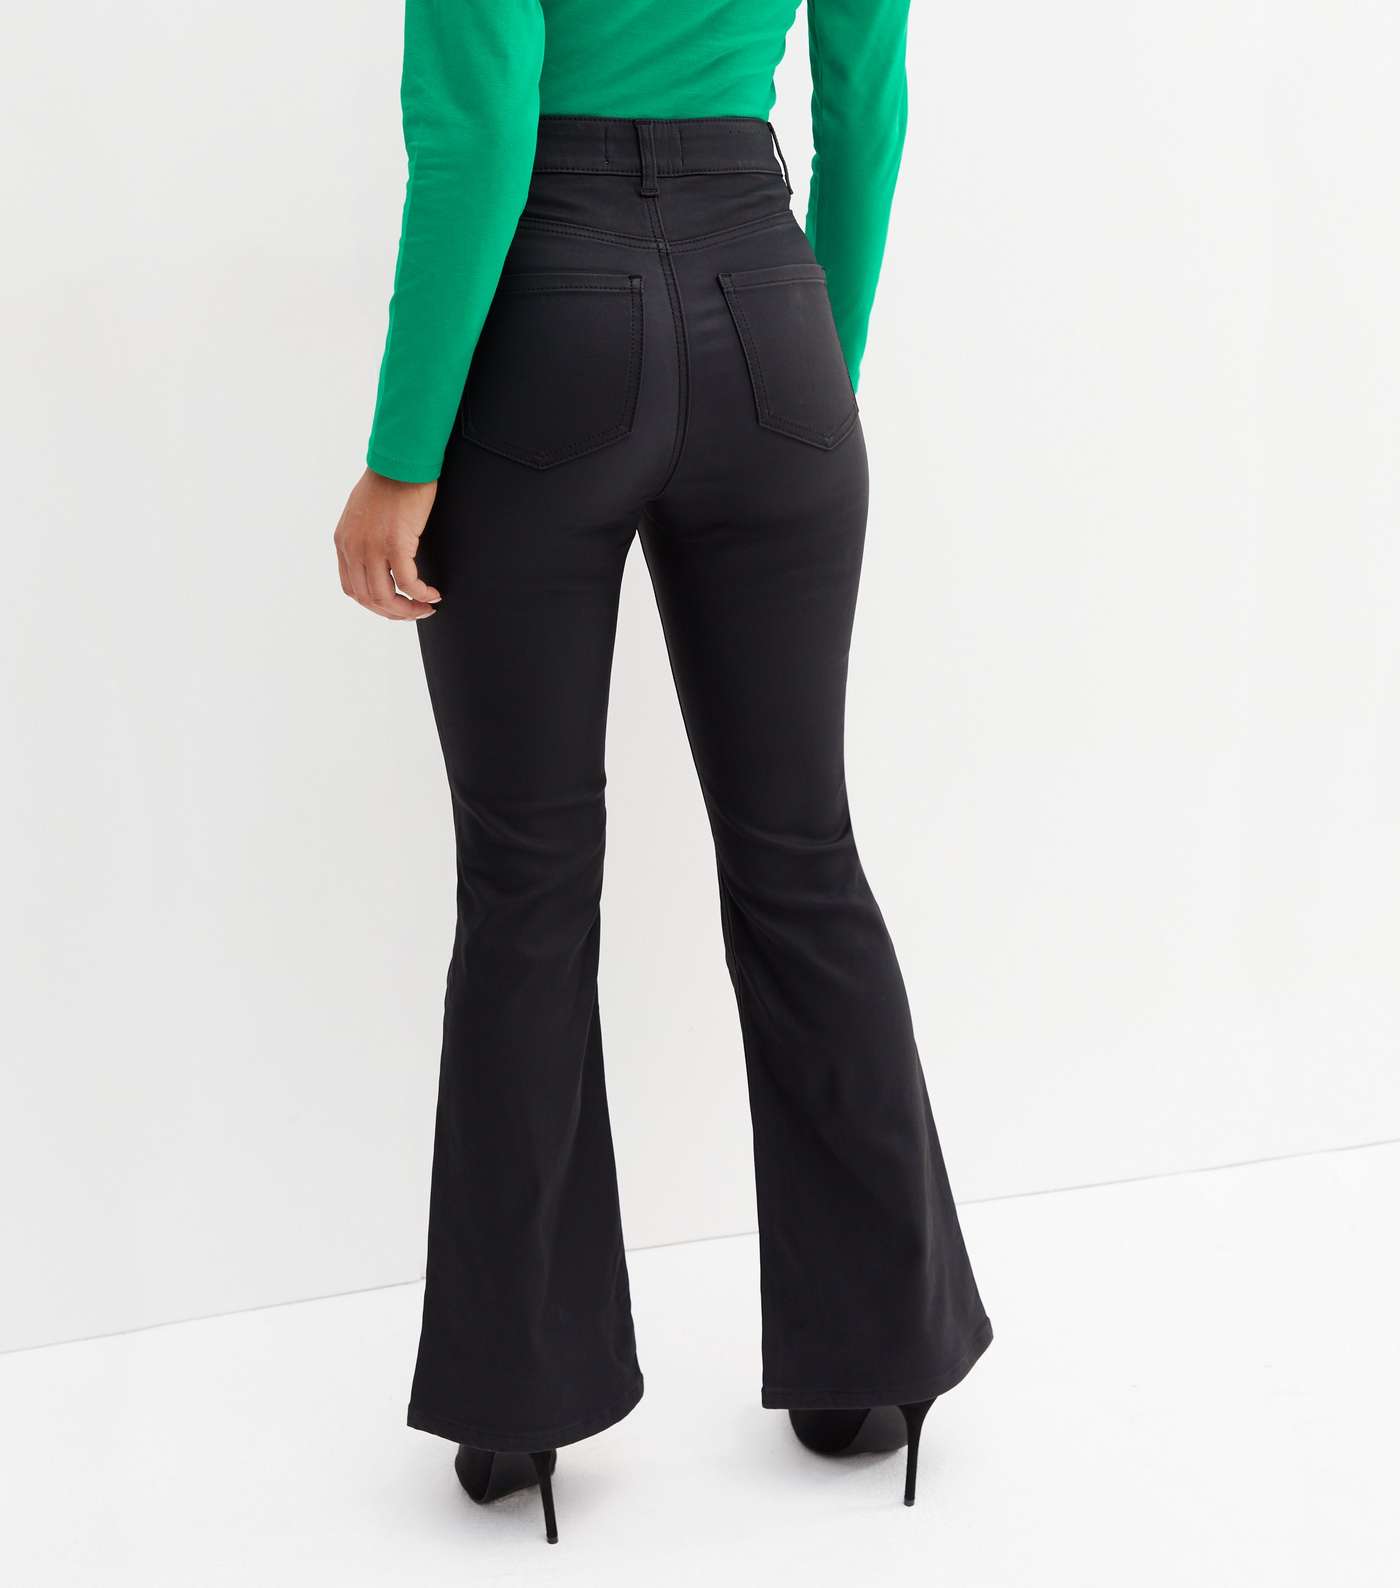 Petite Black Coated Leather-Look Waist Enhance Quinn Bootcut Jeans Image 4